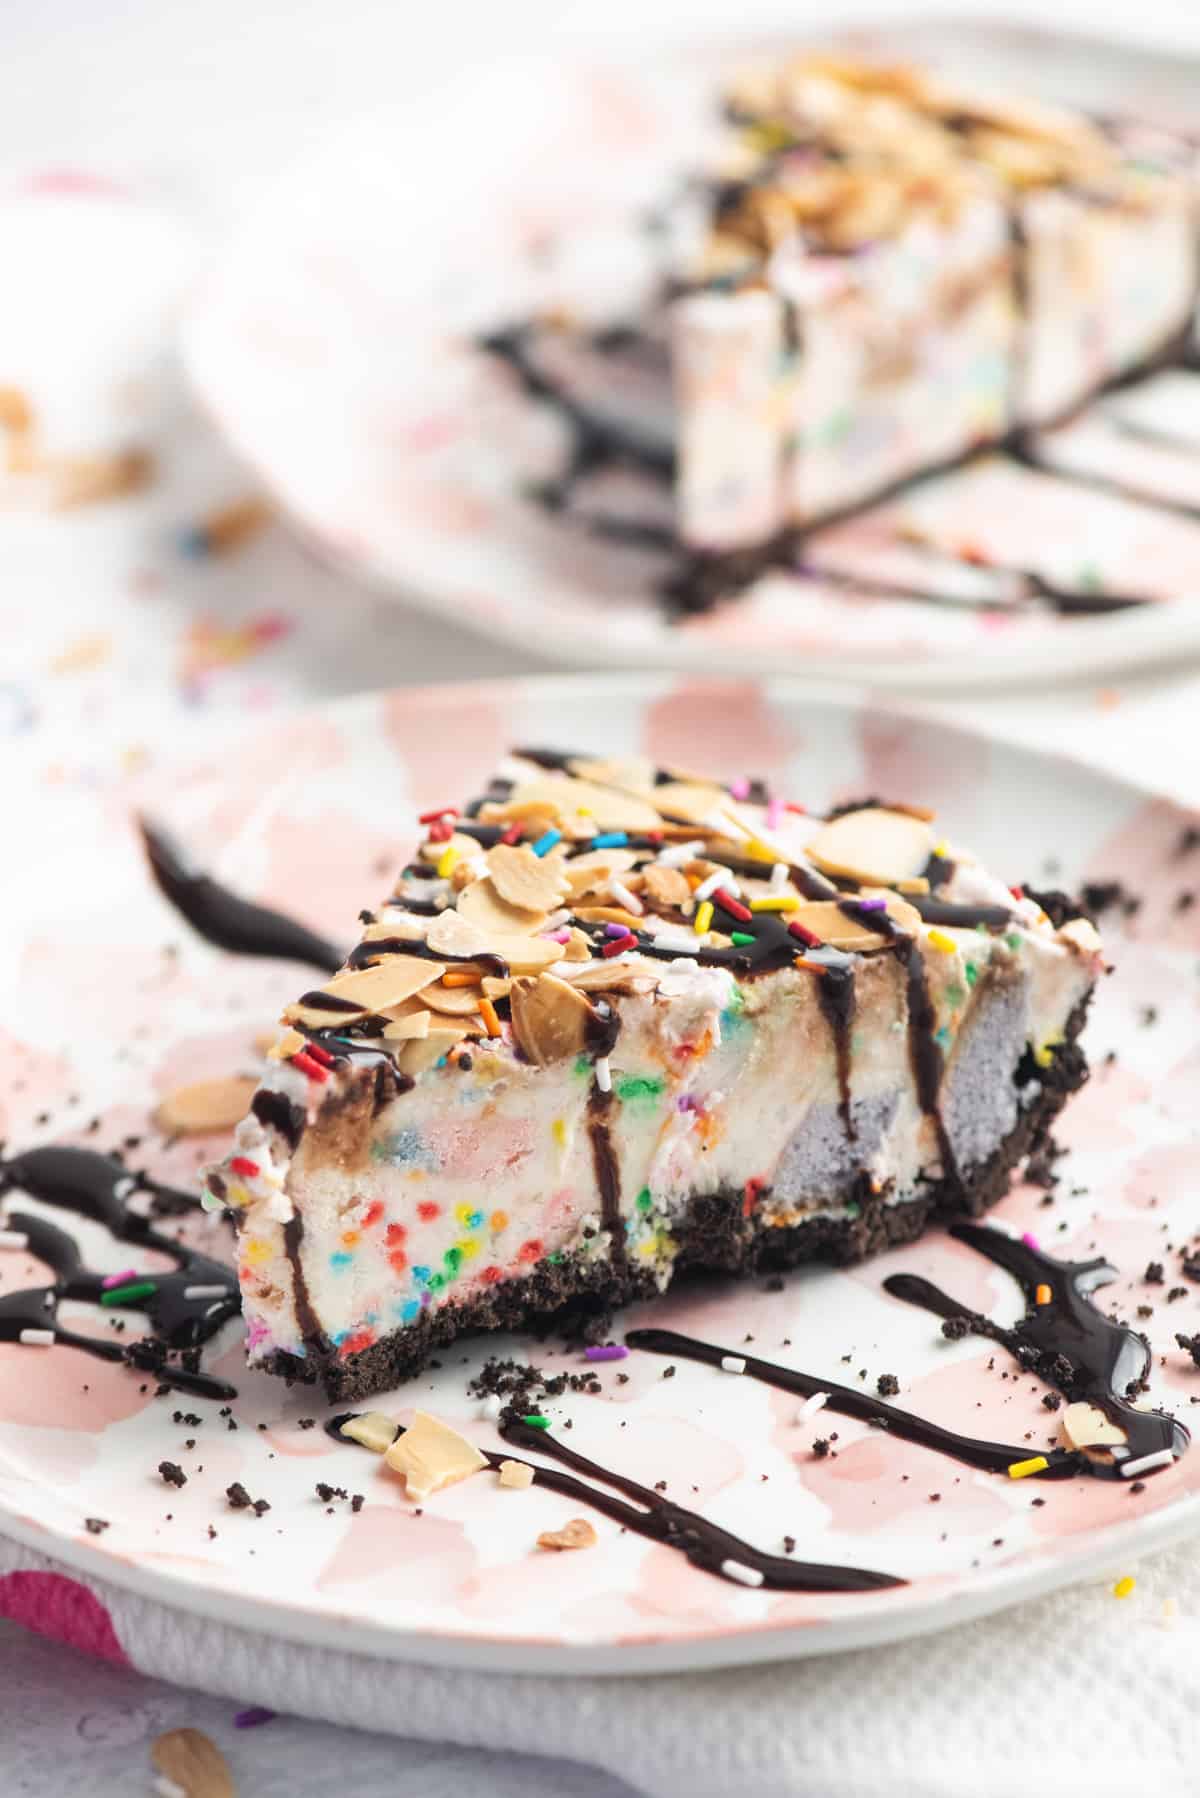 A slice of vanilla ice cream pie with chocolate crust topped with chocolate sauce, rainbow sprinkles, and sliced almonds. Chunks of rainbow cake and sprinkles can be seen inside the vanilla ice cream pie.